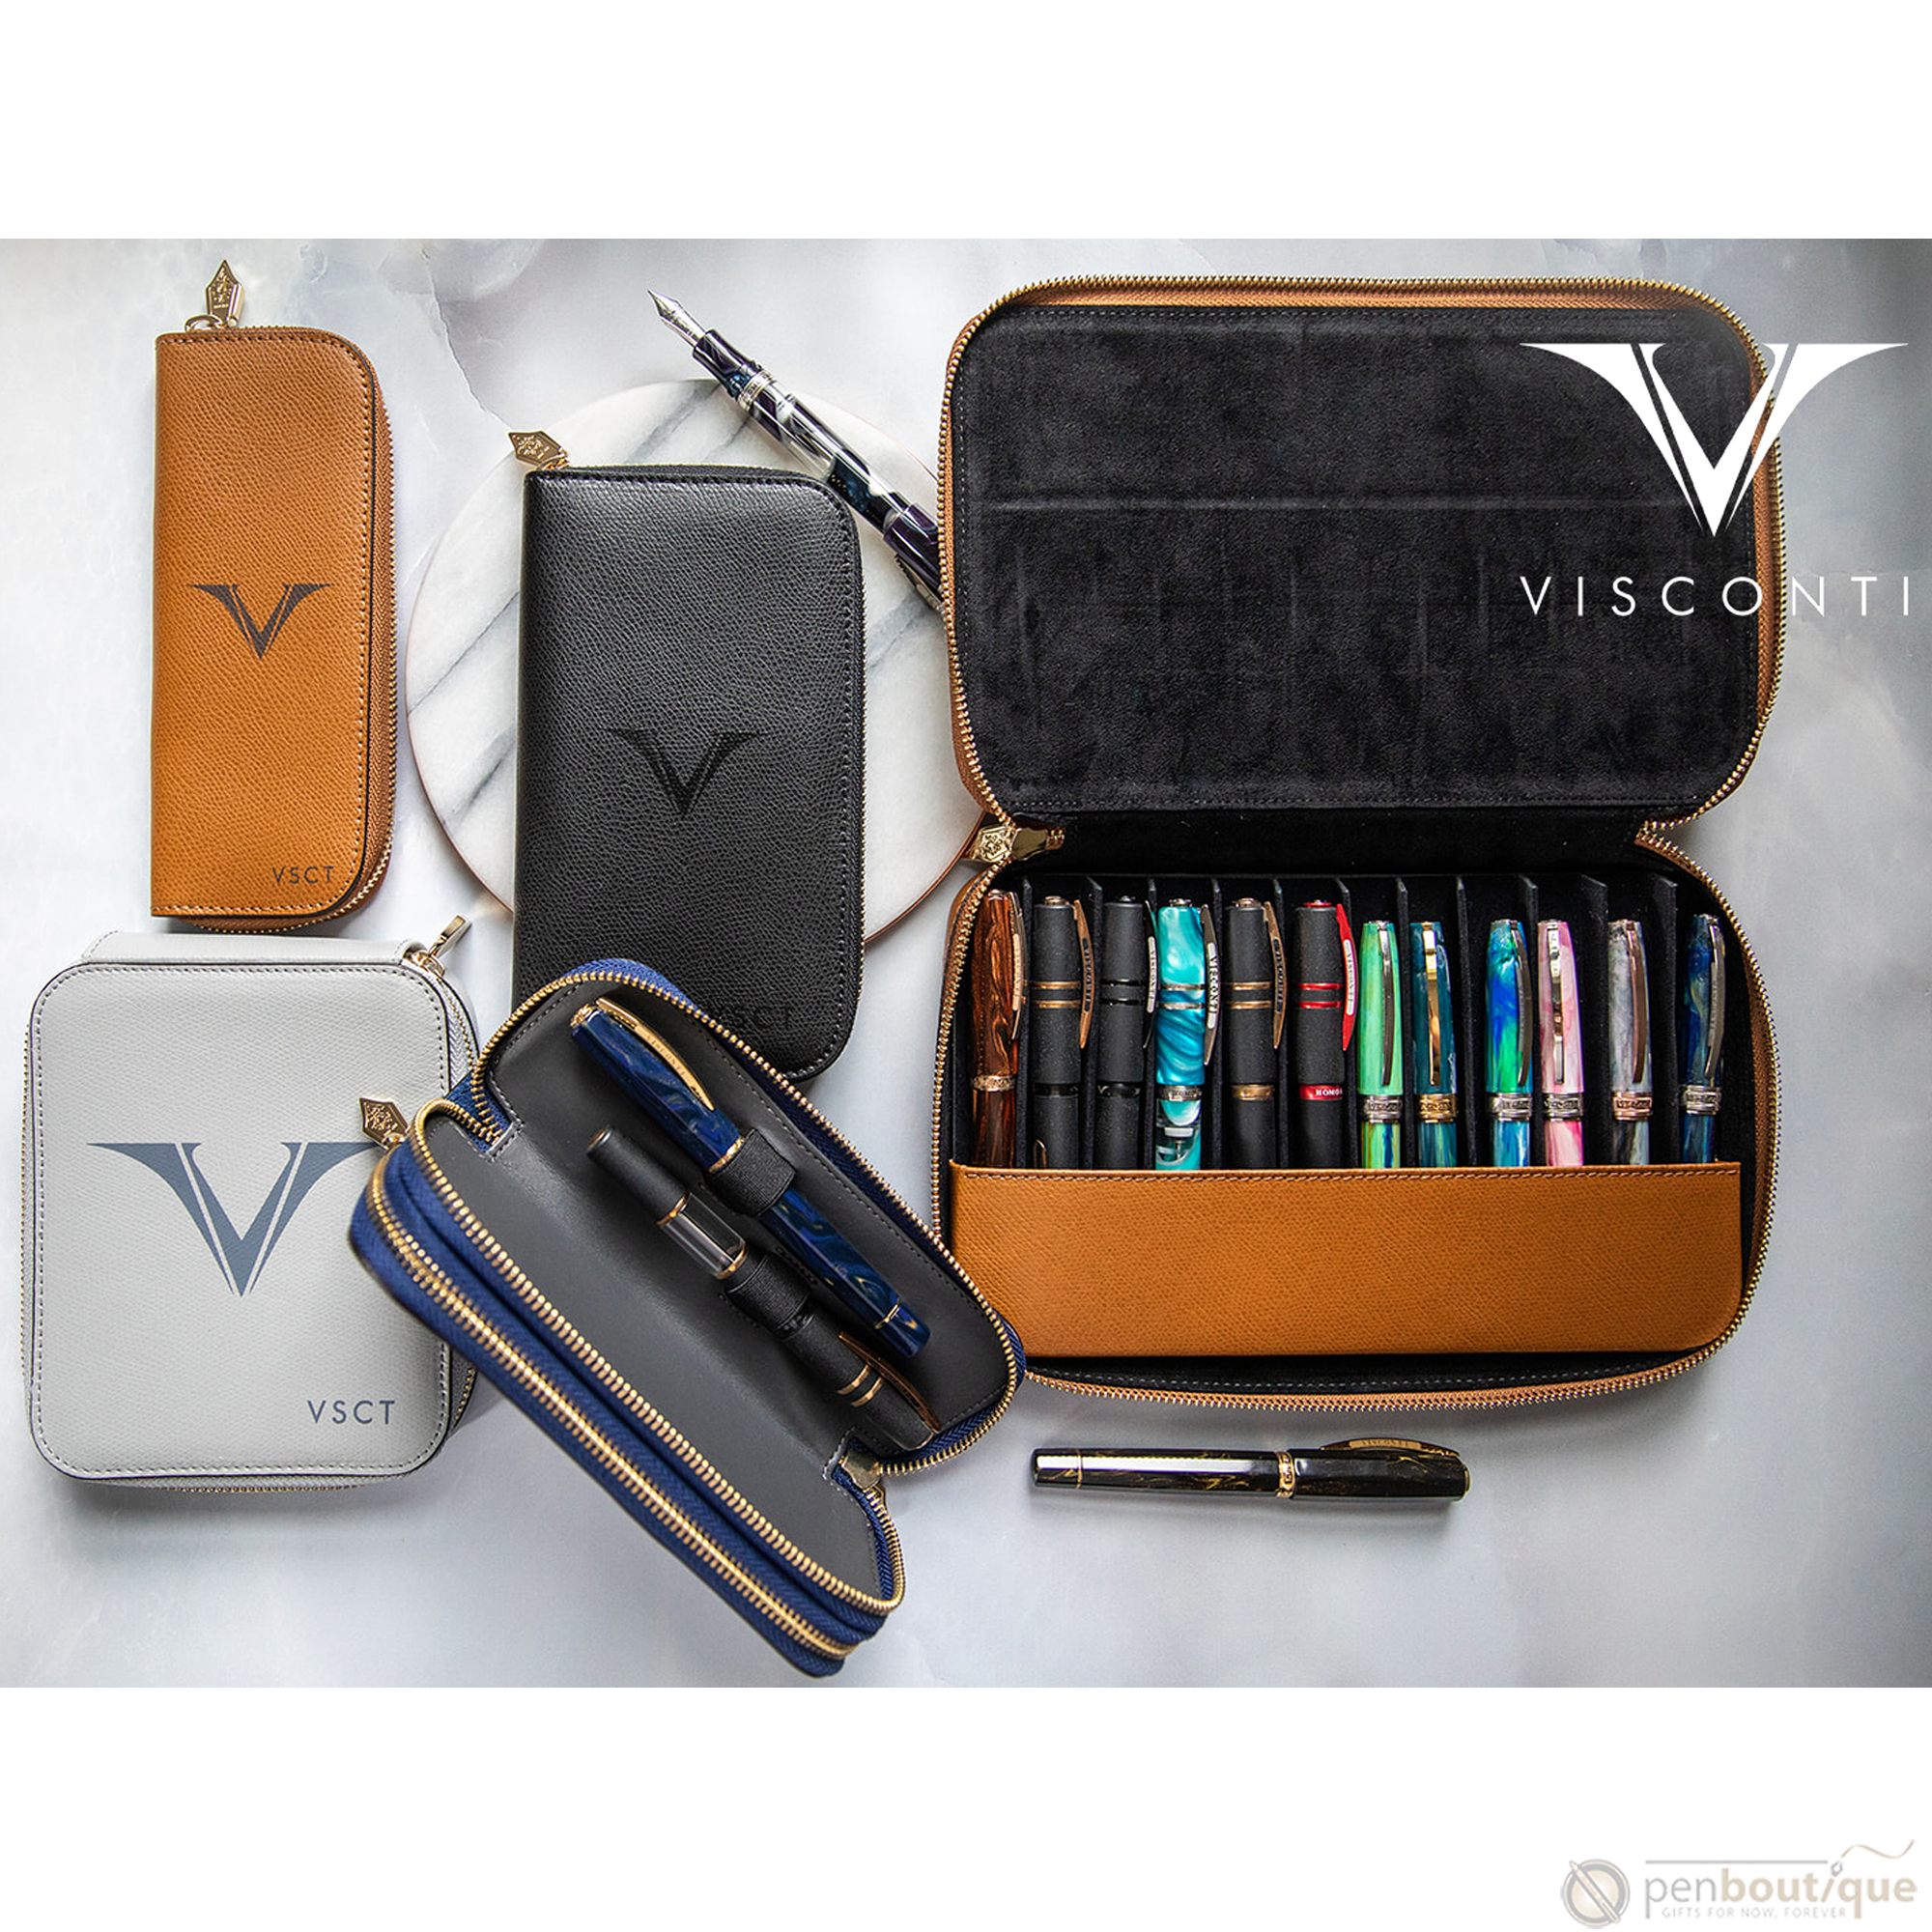 Visconti VSCT Three Pen Holder-Pen Boutique Ltd